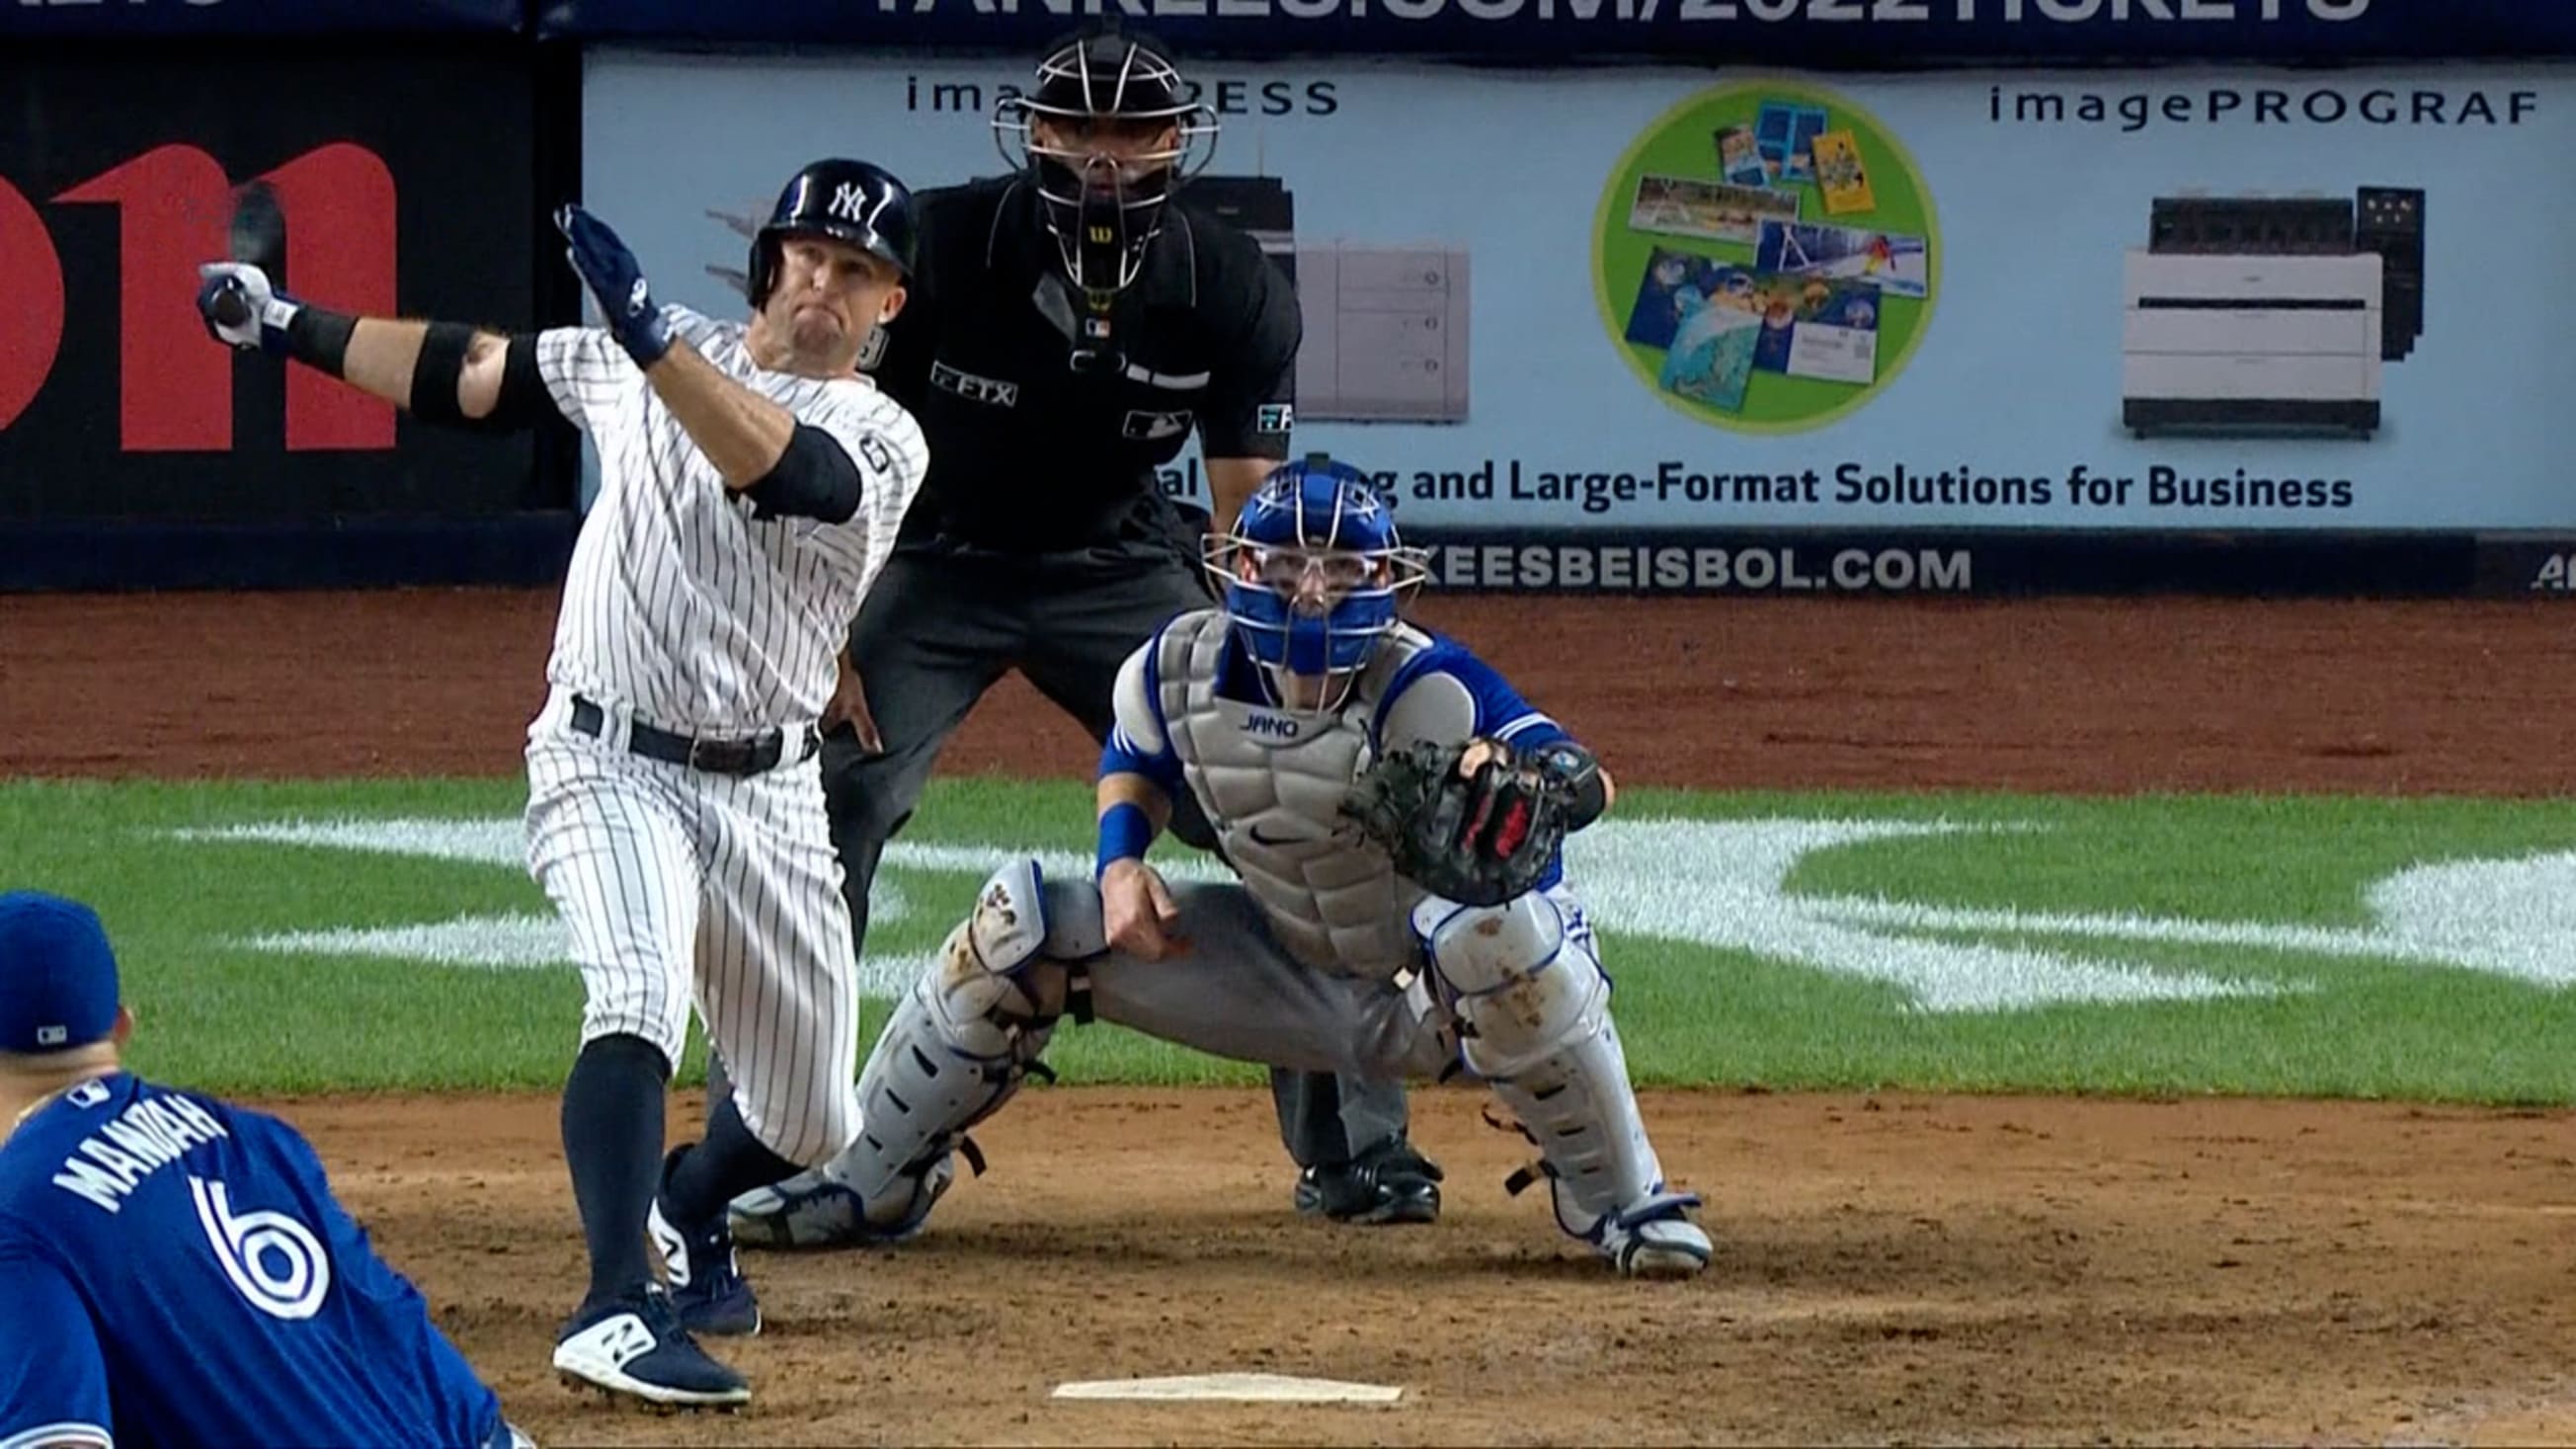 Mazzeo: Brett Gardner's clutch home run is reminder Yankees have